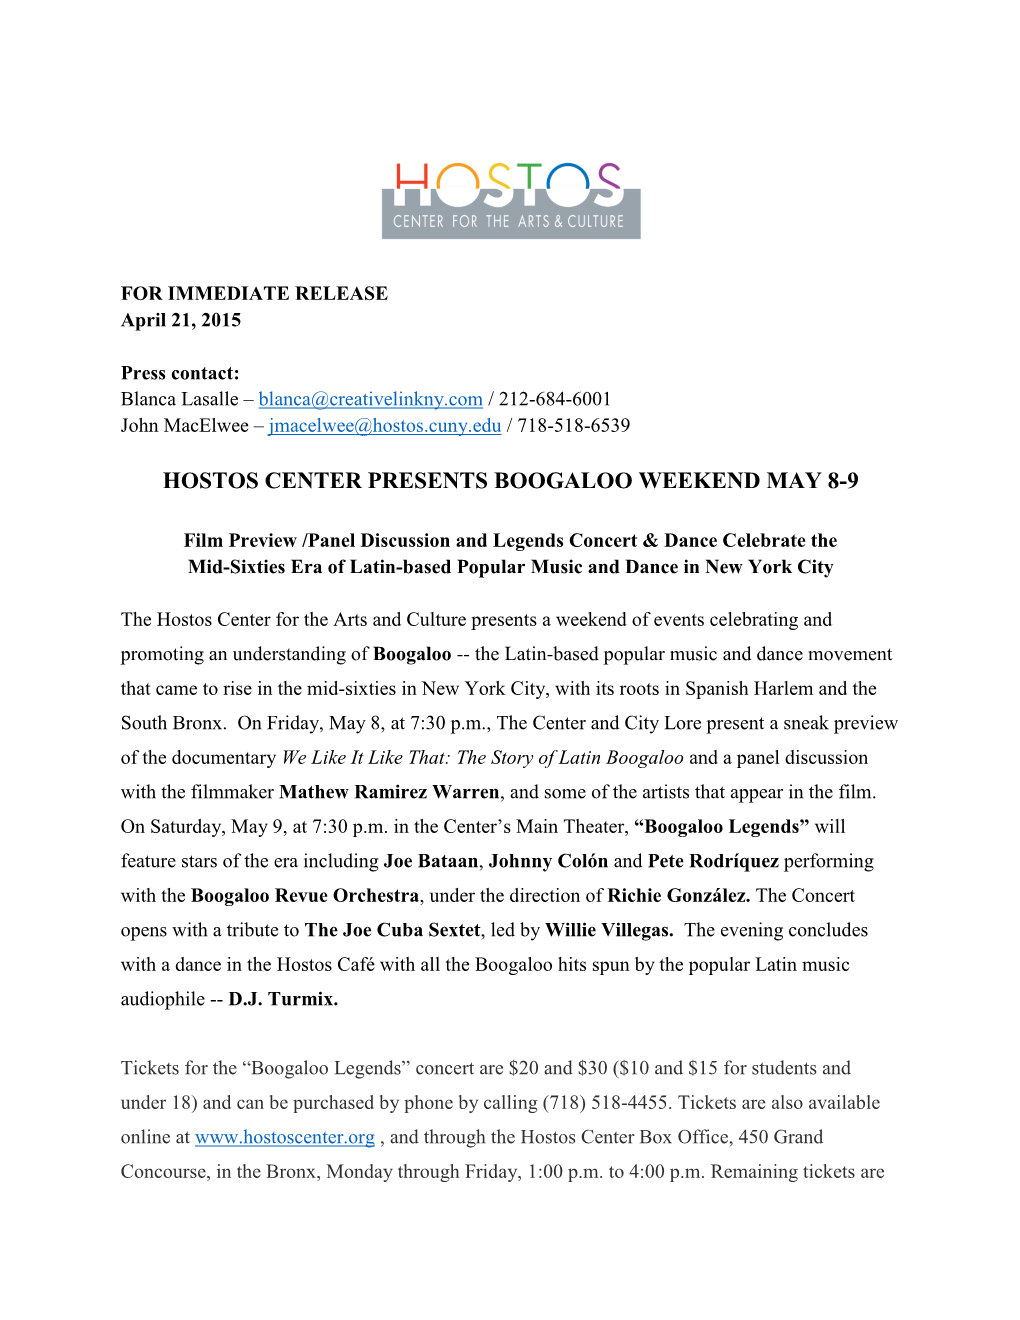 Hostos Center Presents Boogaloo Weekend May 8-9